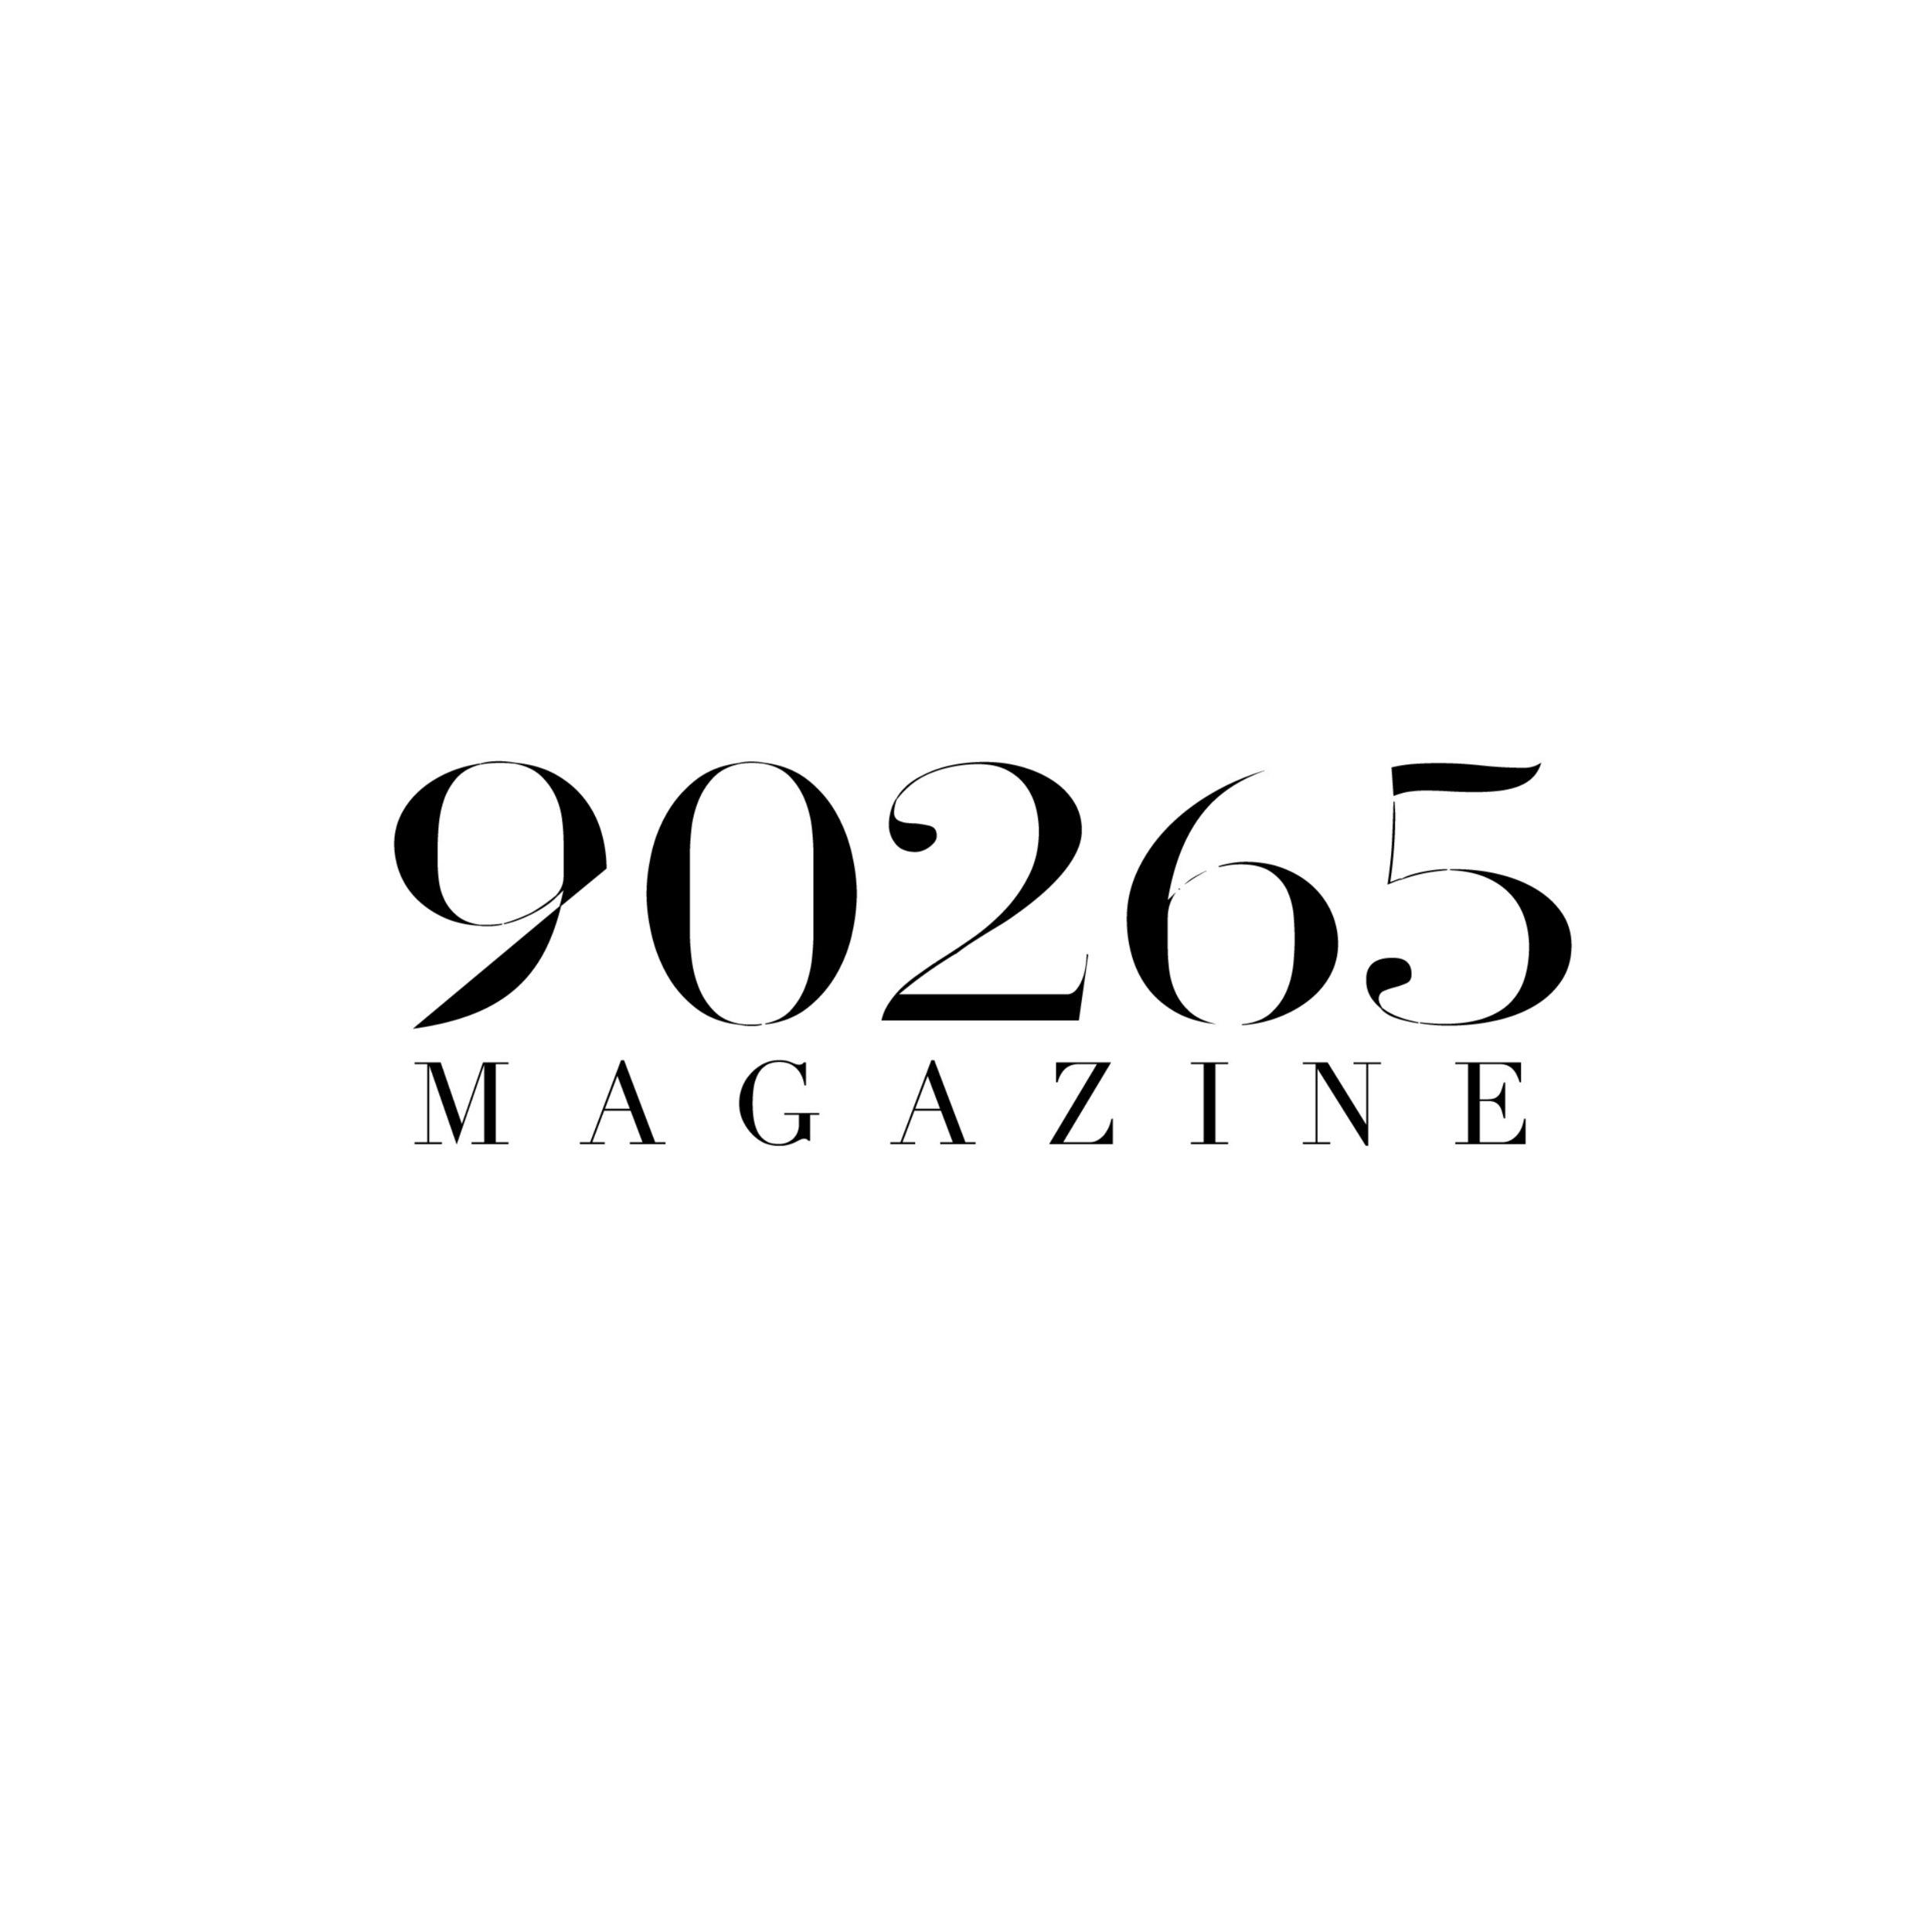 90265 Magazine.png